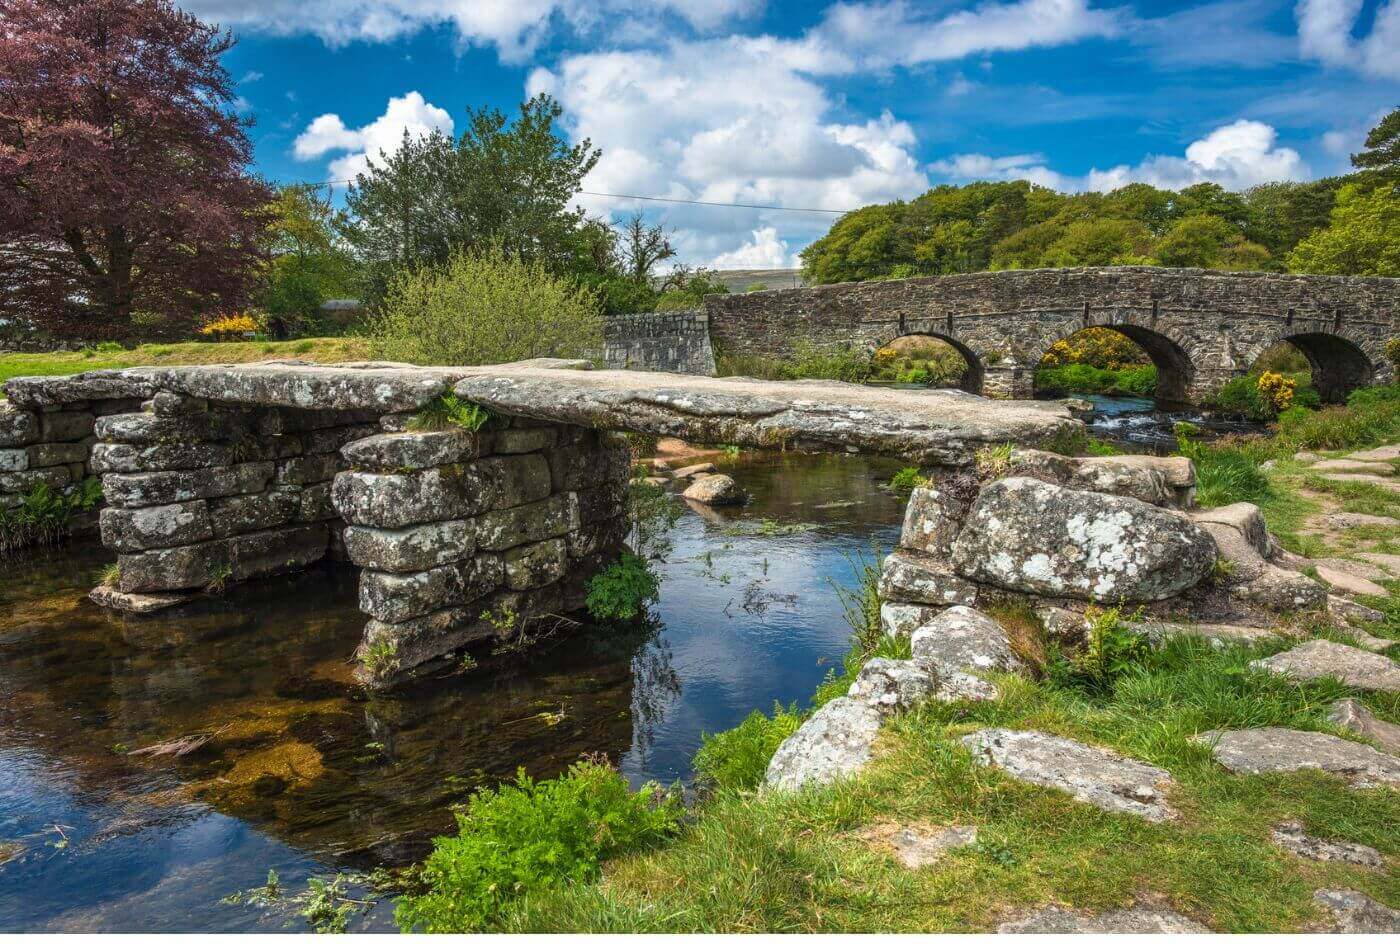 Medieval clapper bridge over the East Dart River at Postbridge on Dartmoor in West Country.